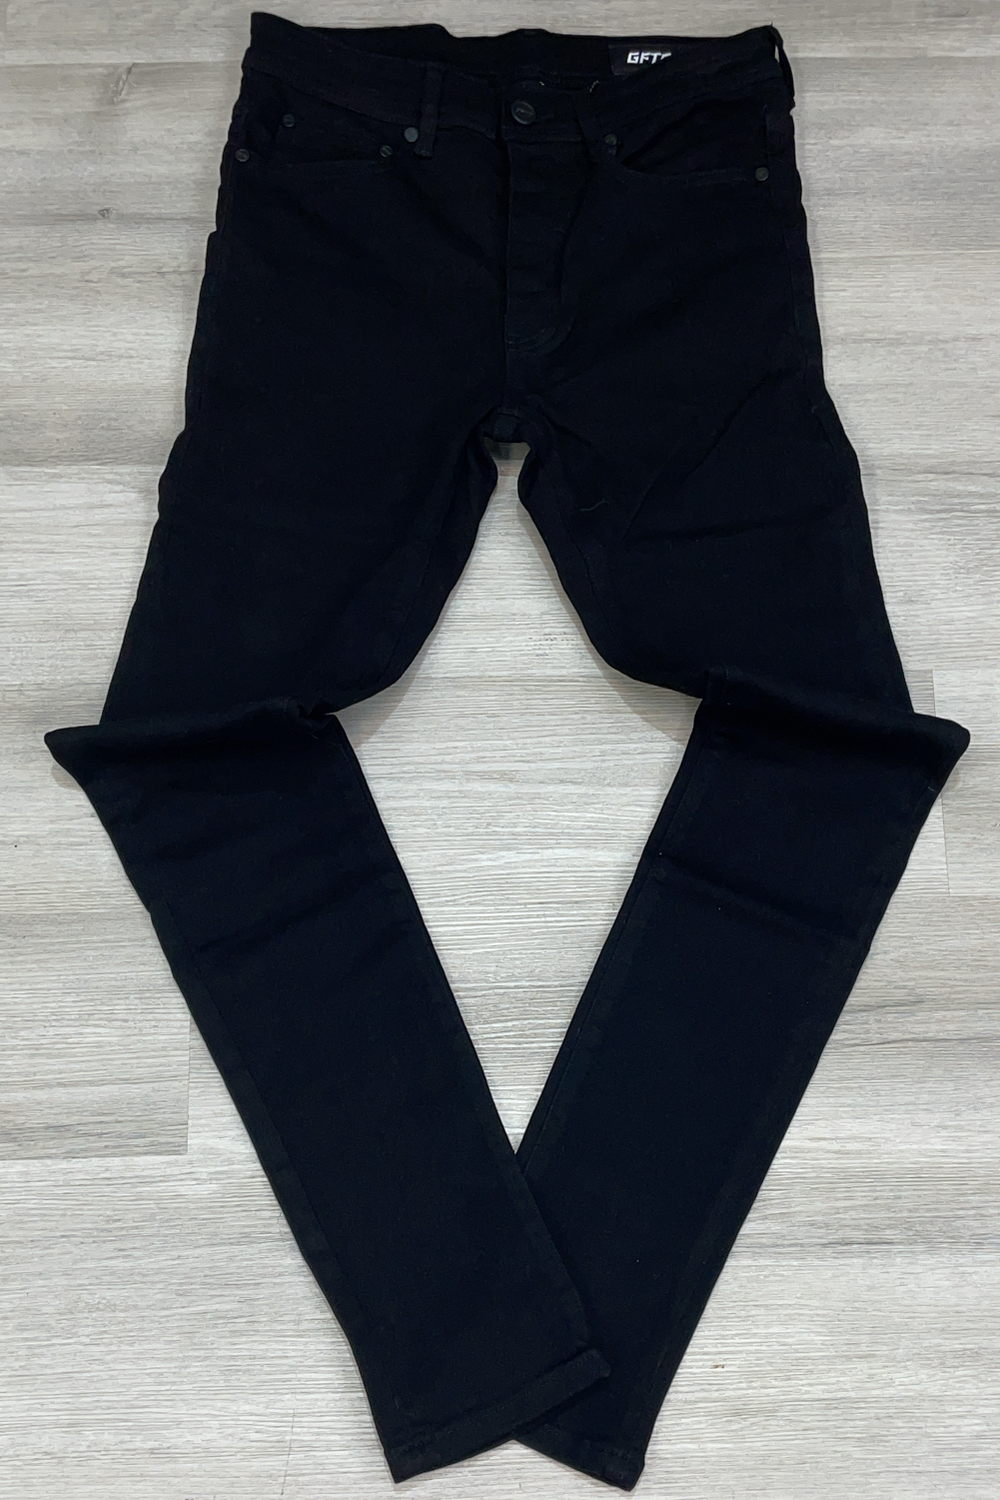 GFTD - banson jeans (black)